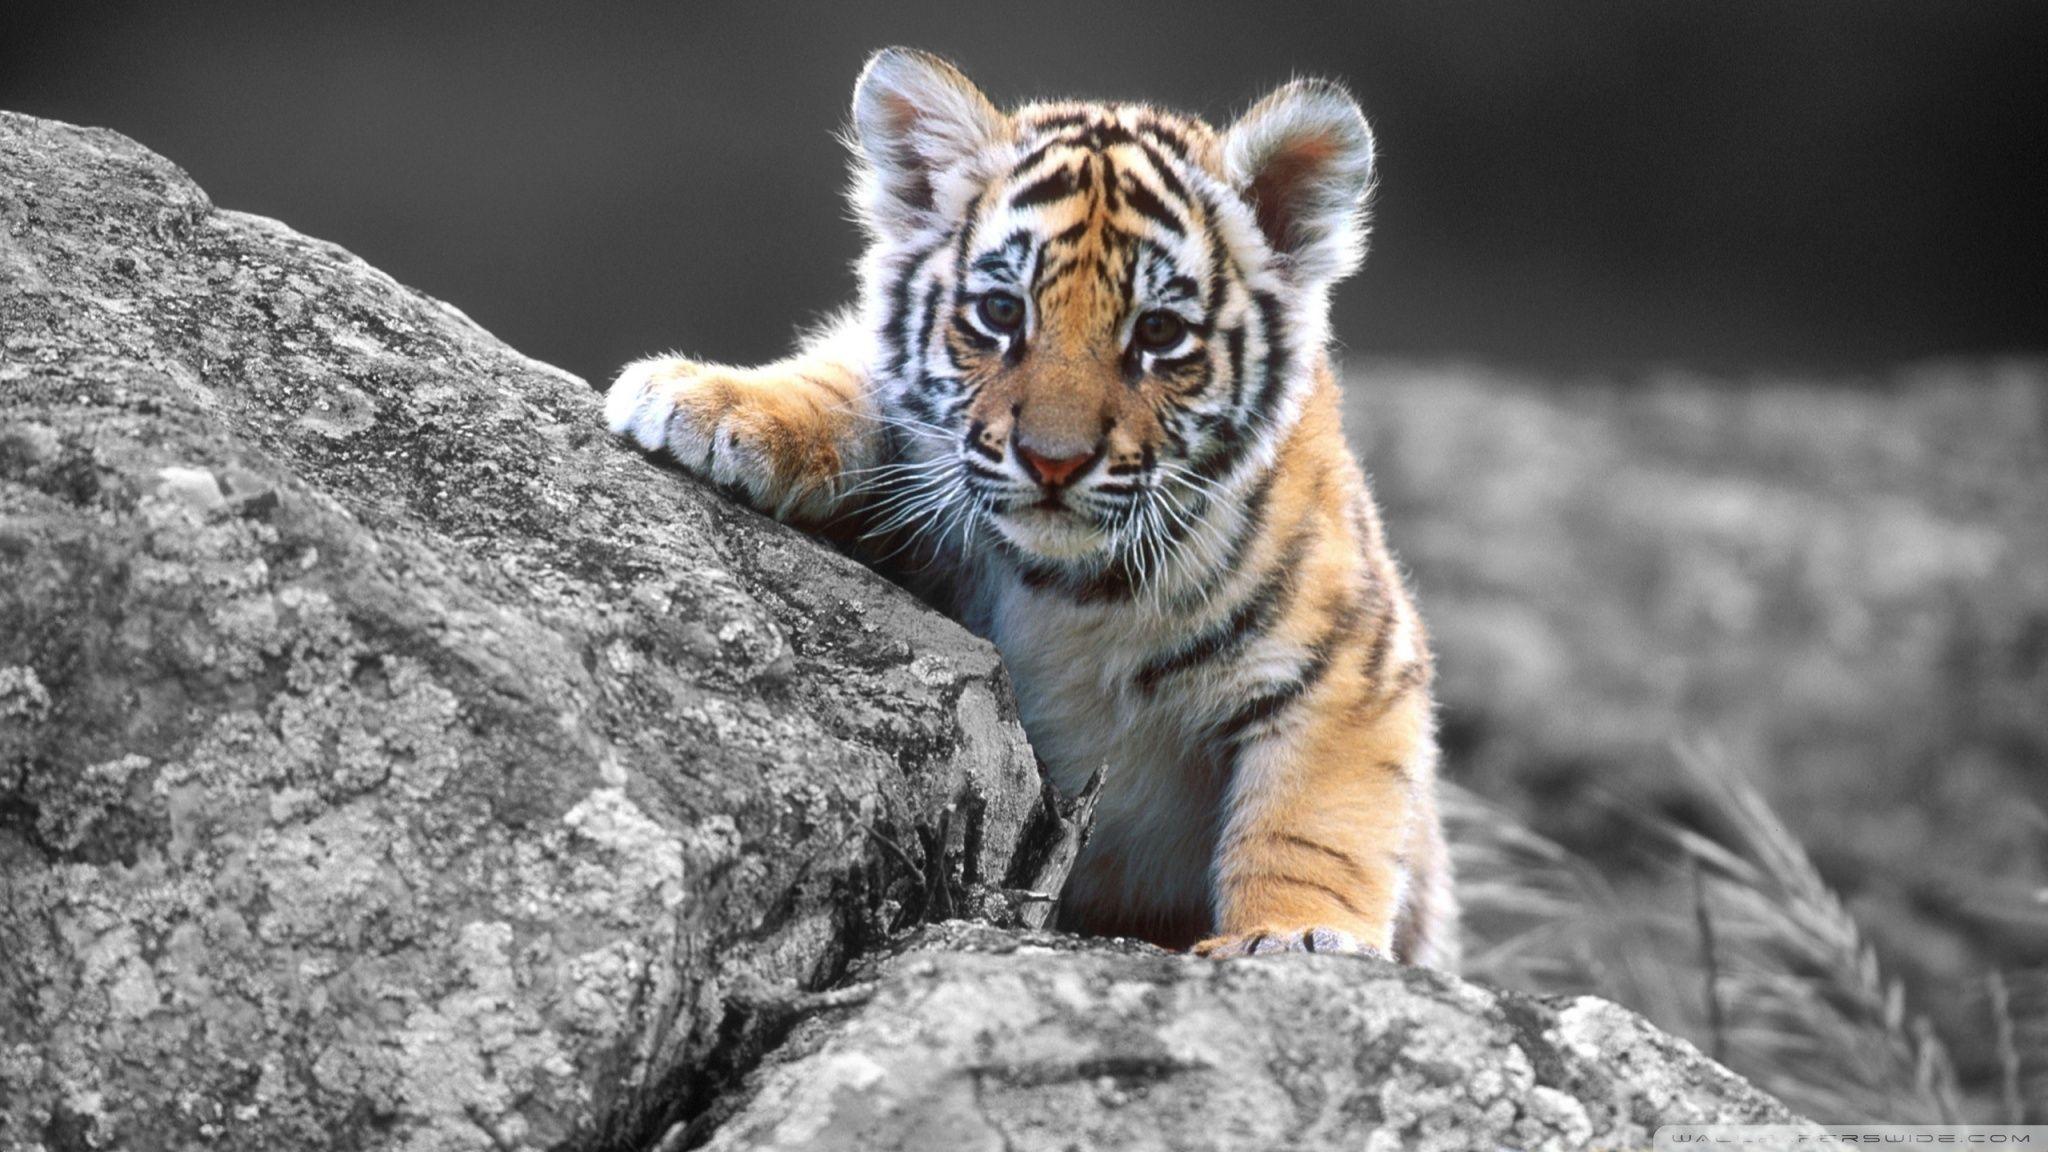 Cute Tiger Cub ❤ 4K HD Desktop Wallpaper for 4K Ultra HD TV